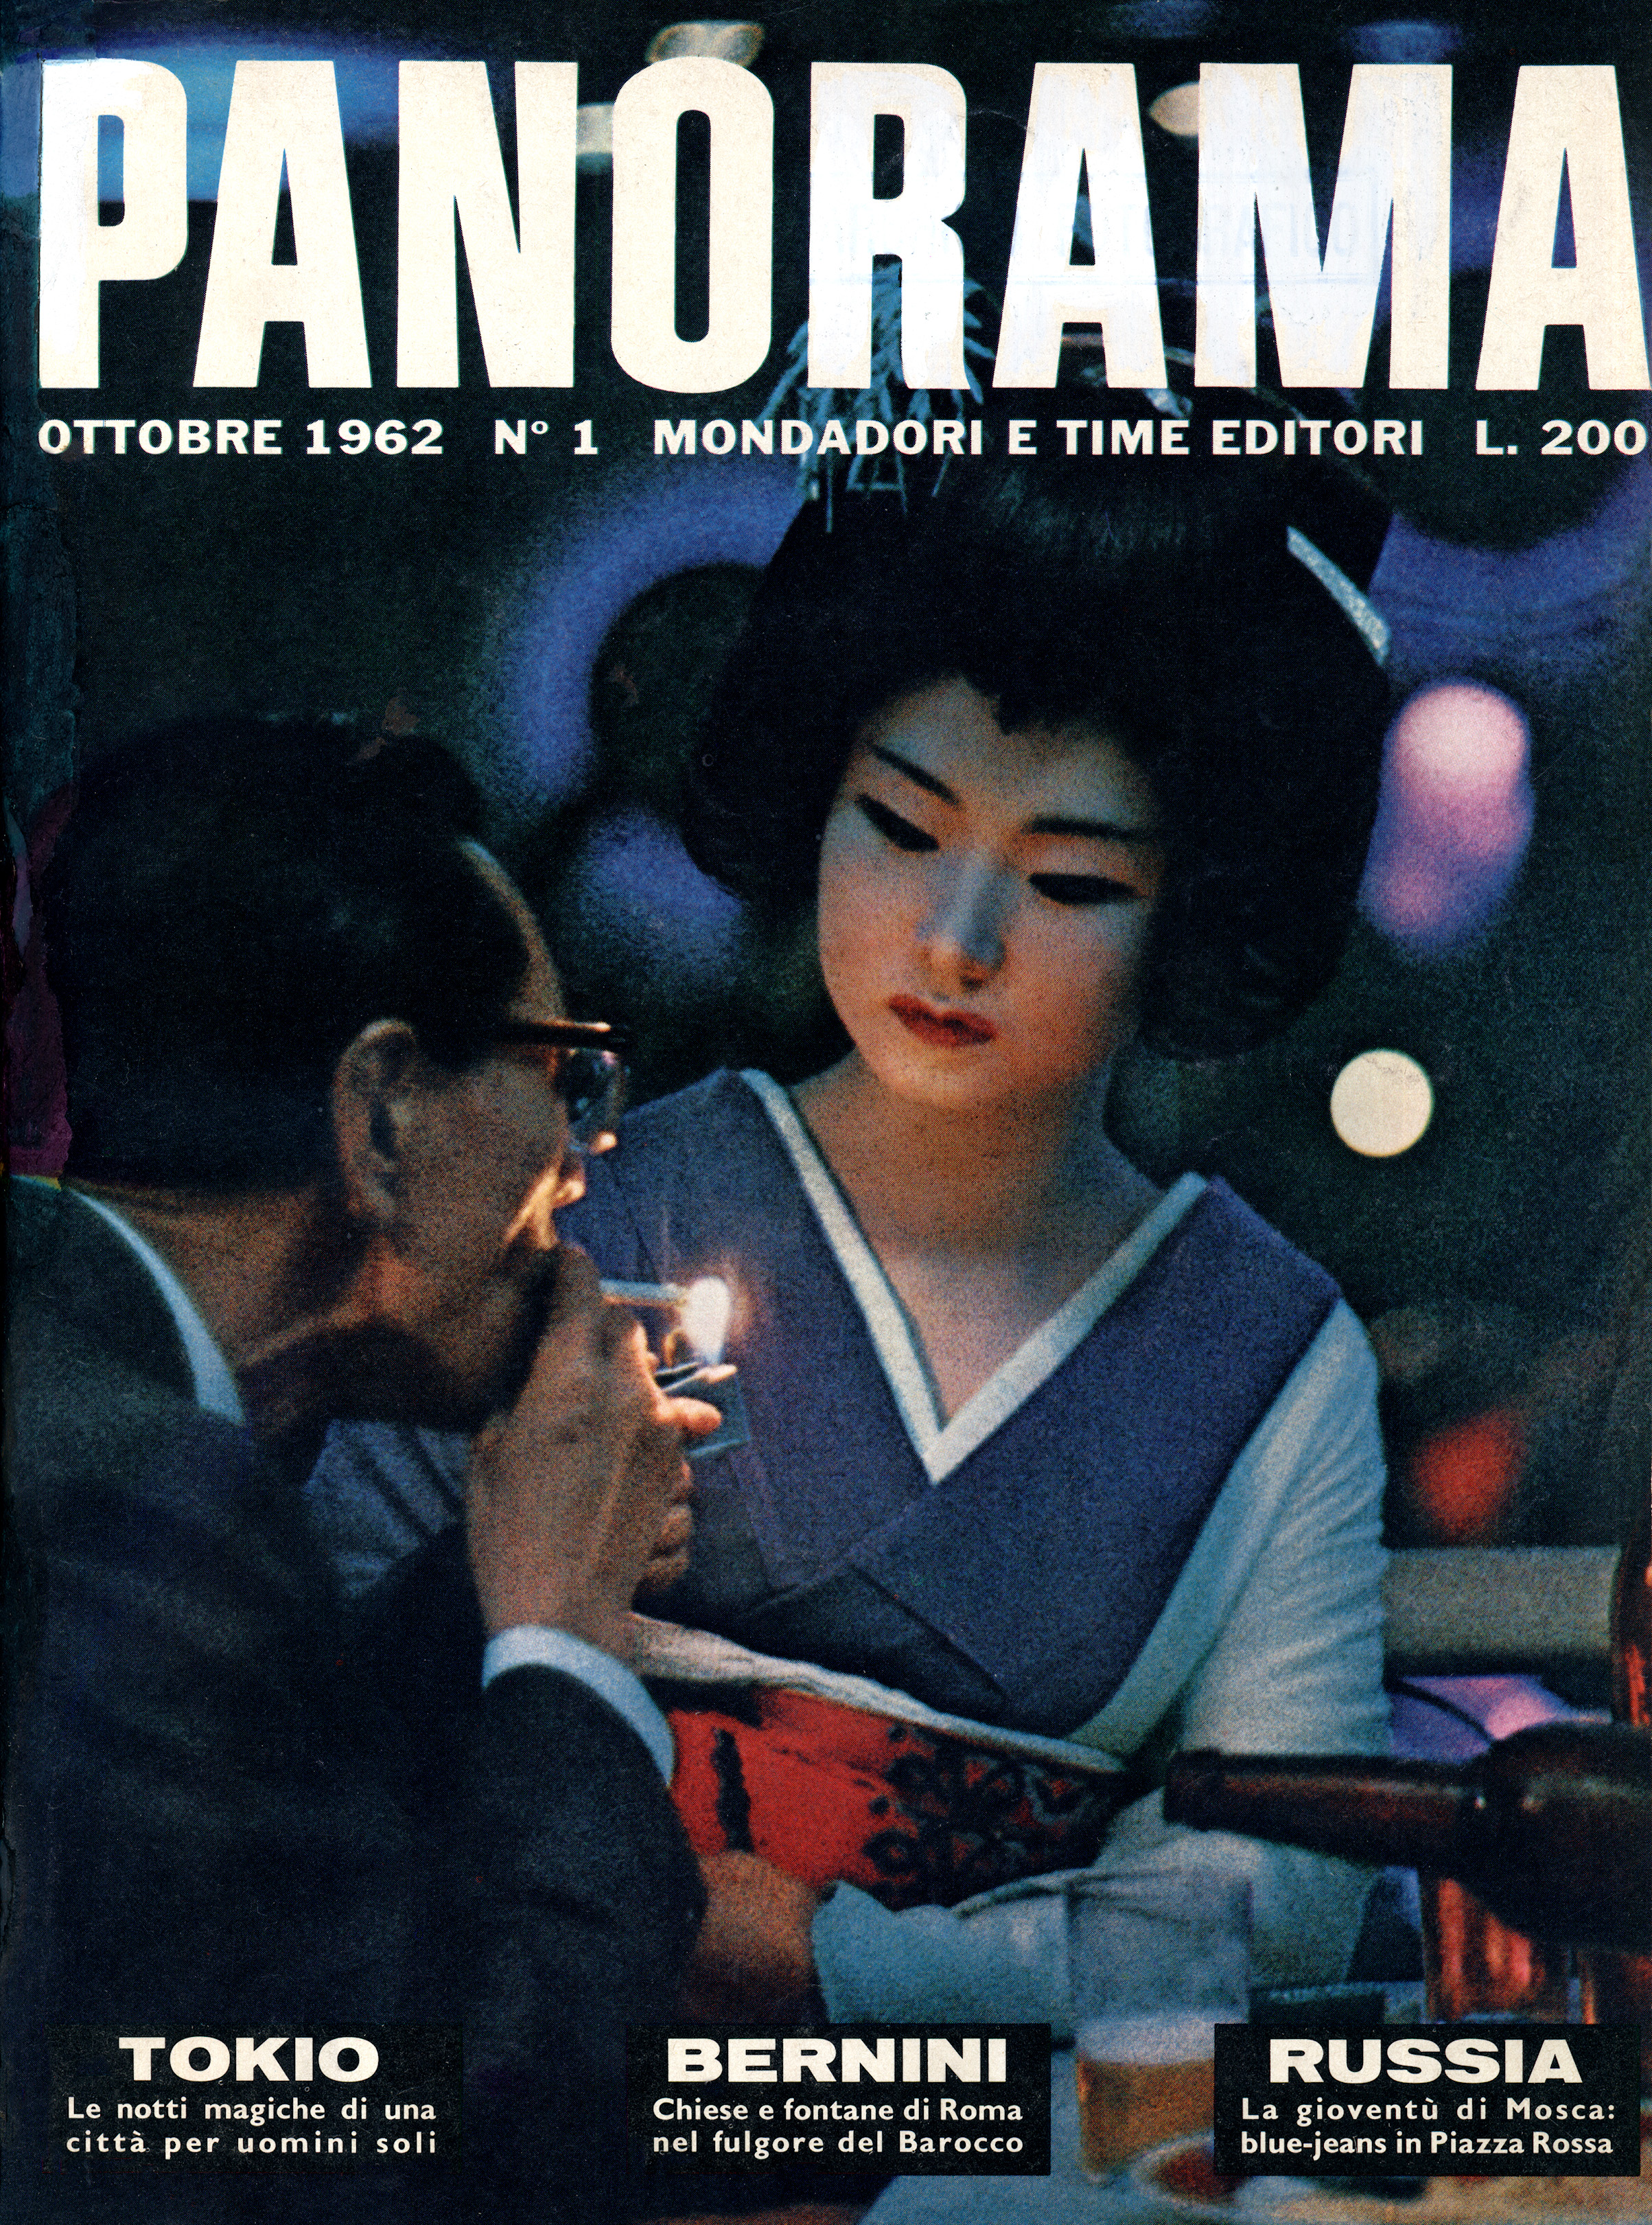 Panorama (magazine) - Wikipedia